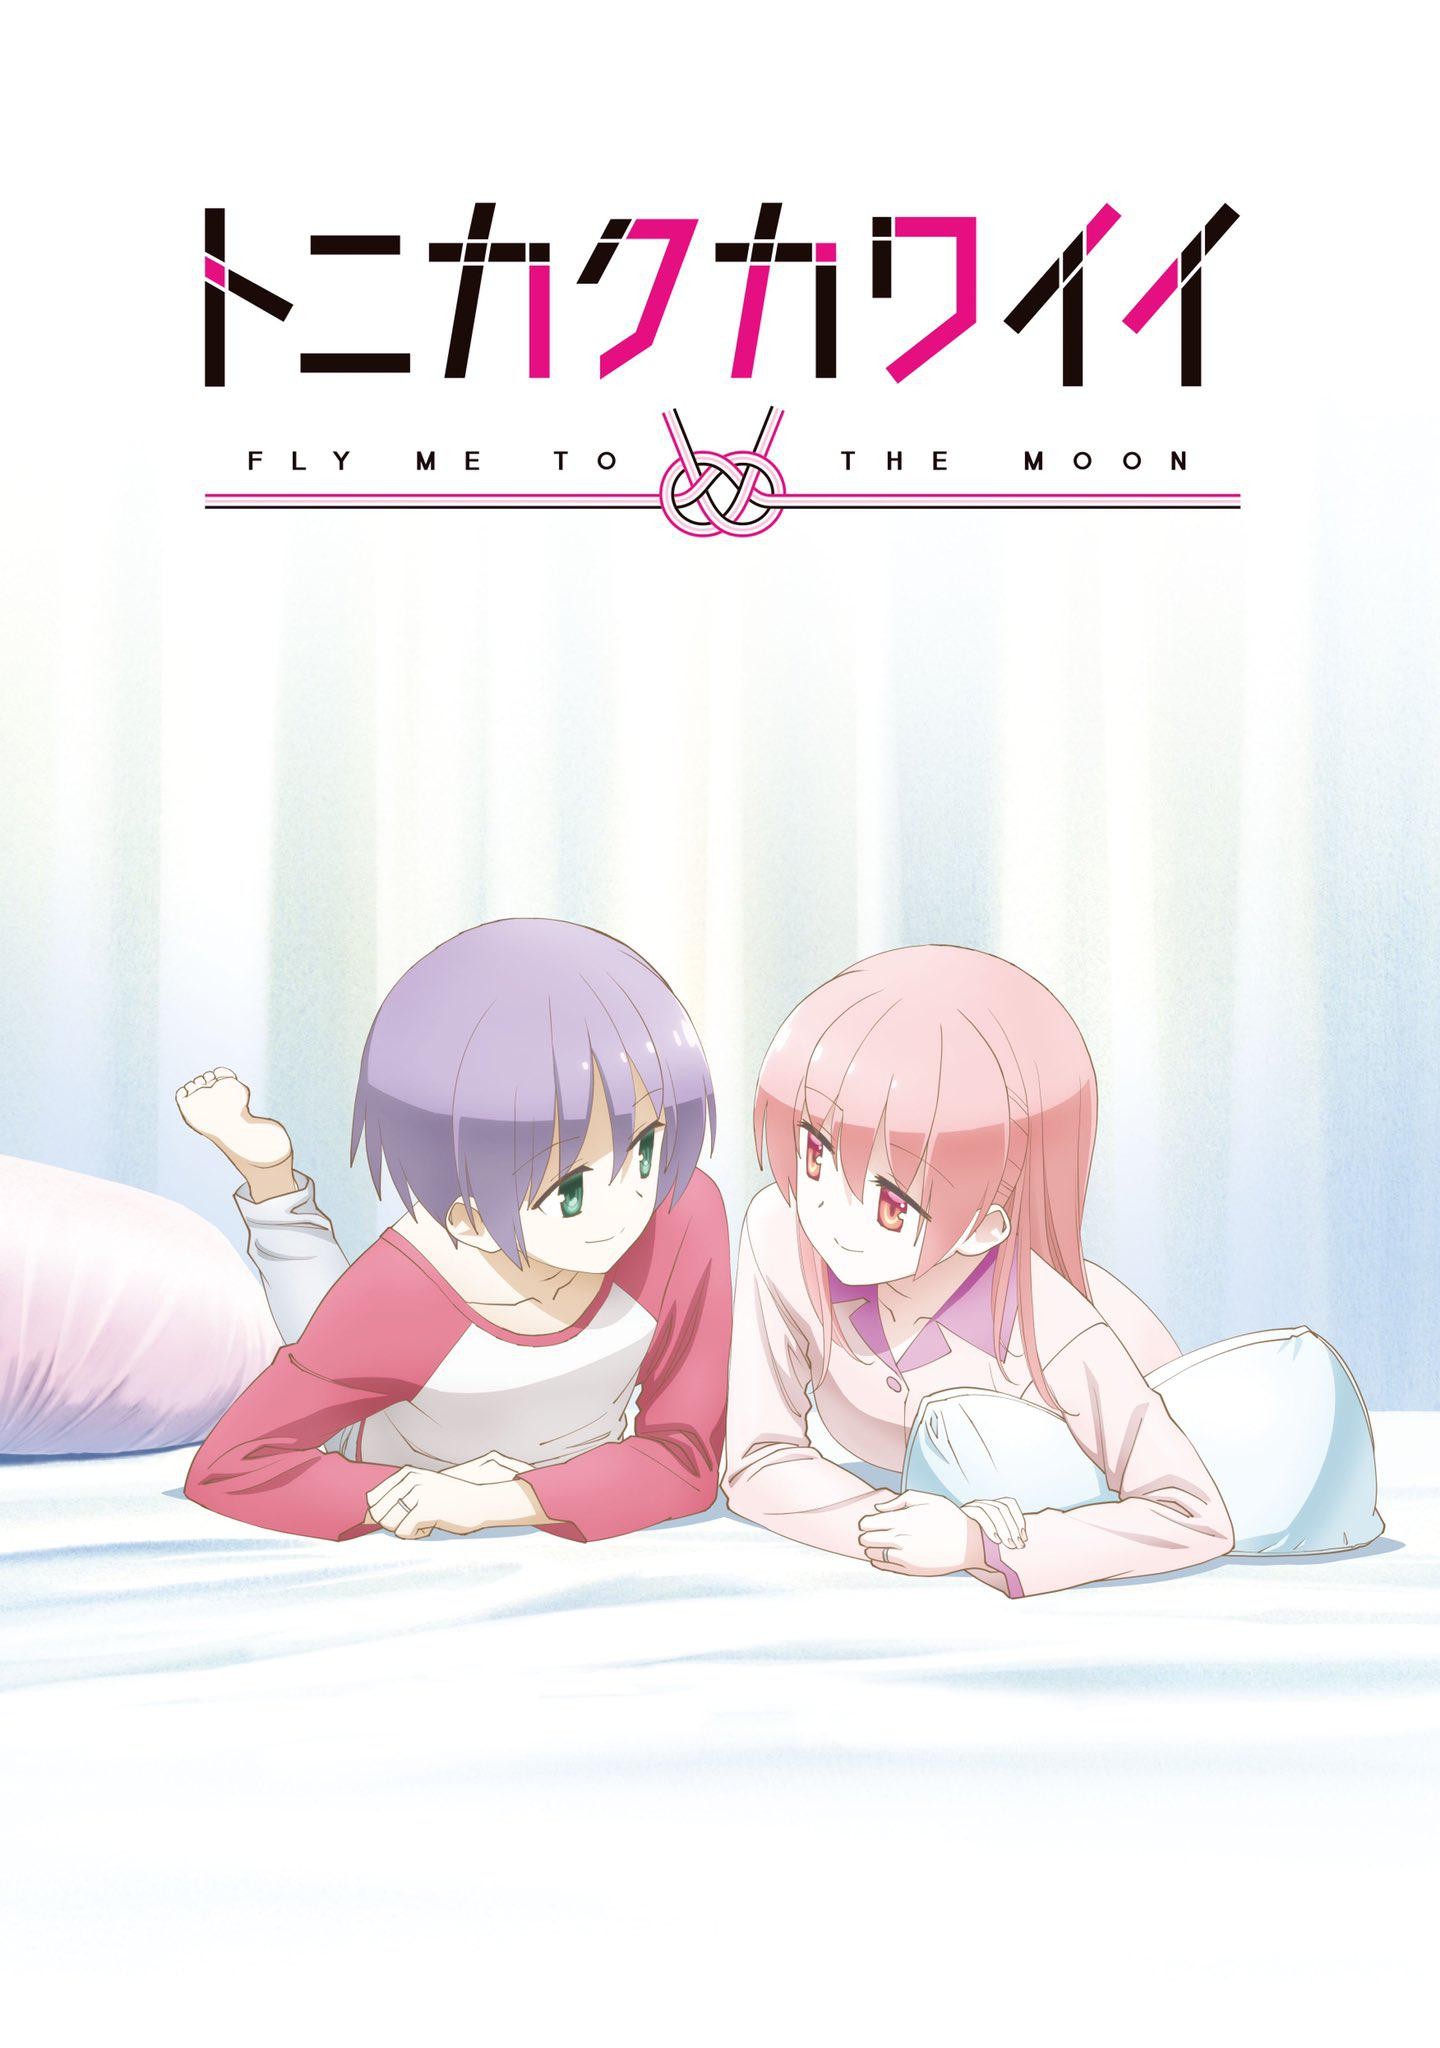 [Niconeiko Works] Tonikaku Kawaii OVA SNS 总之就是很可爱 OVA SNS 1080P BDRip Ma10p FLAC